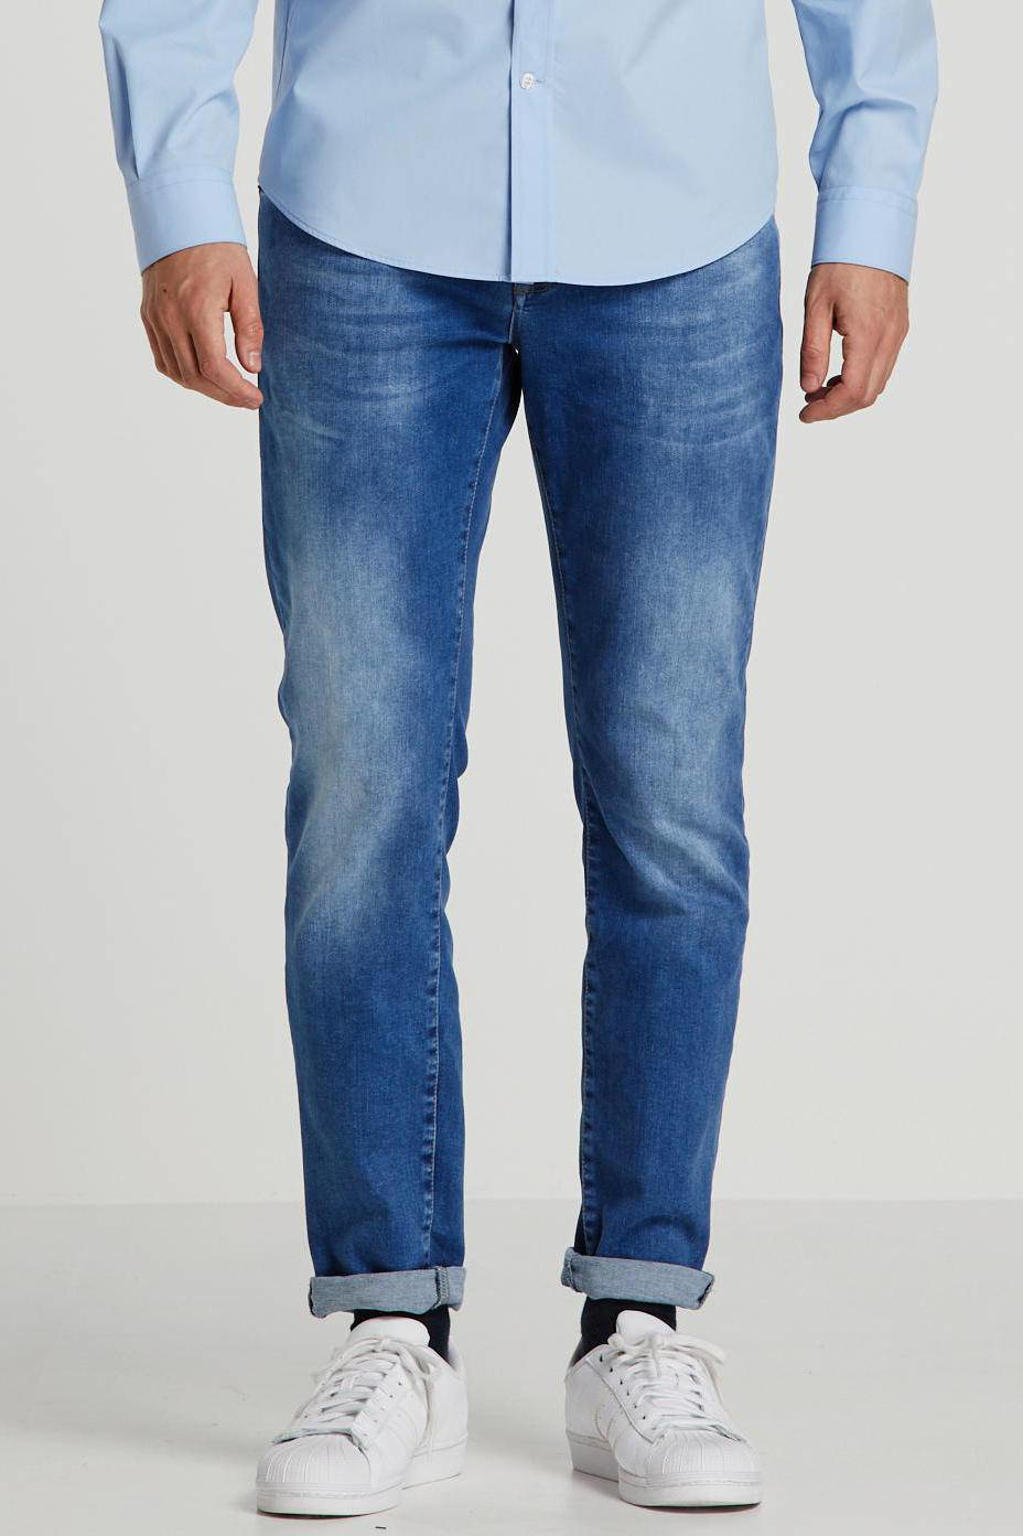 Cars slim fit jeans Bates blue used